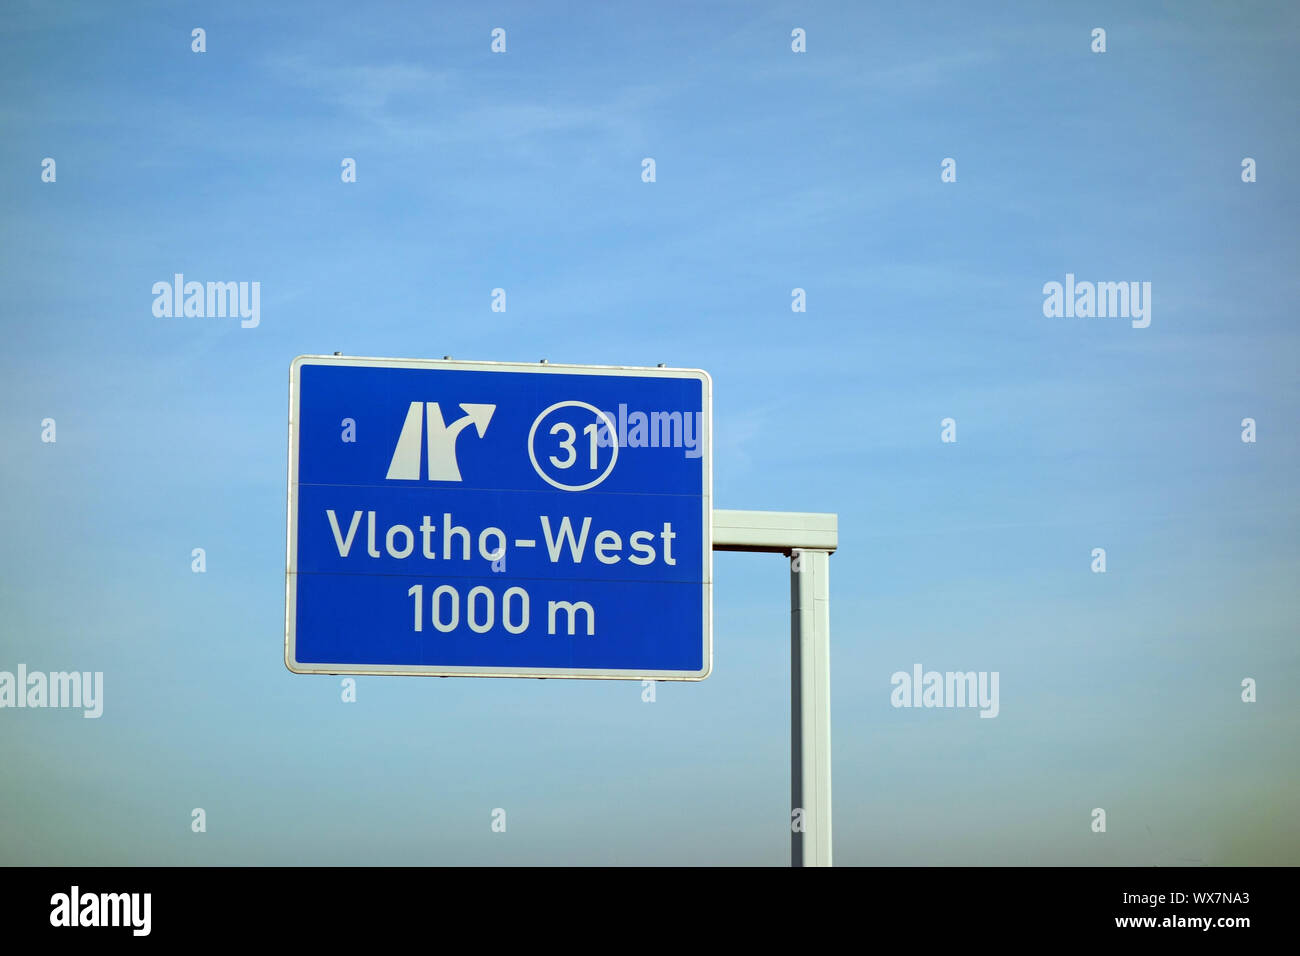 highway sign, vlotho-west, 1000m, 31 Stock Photo